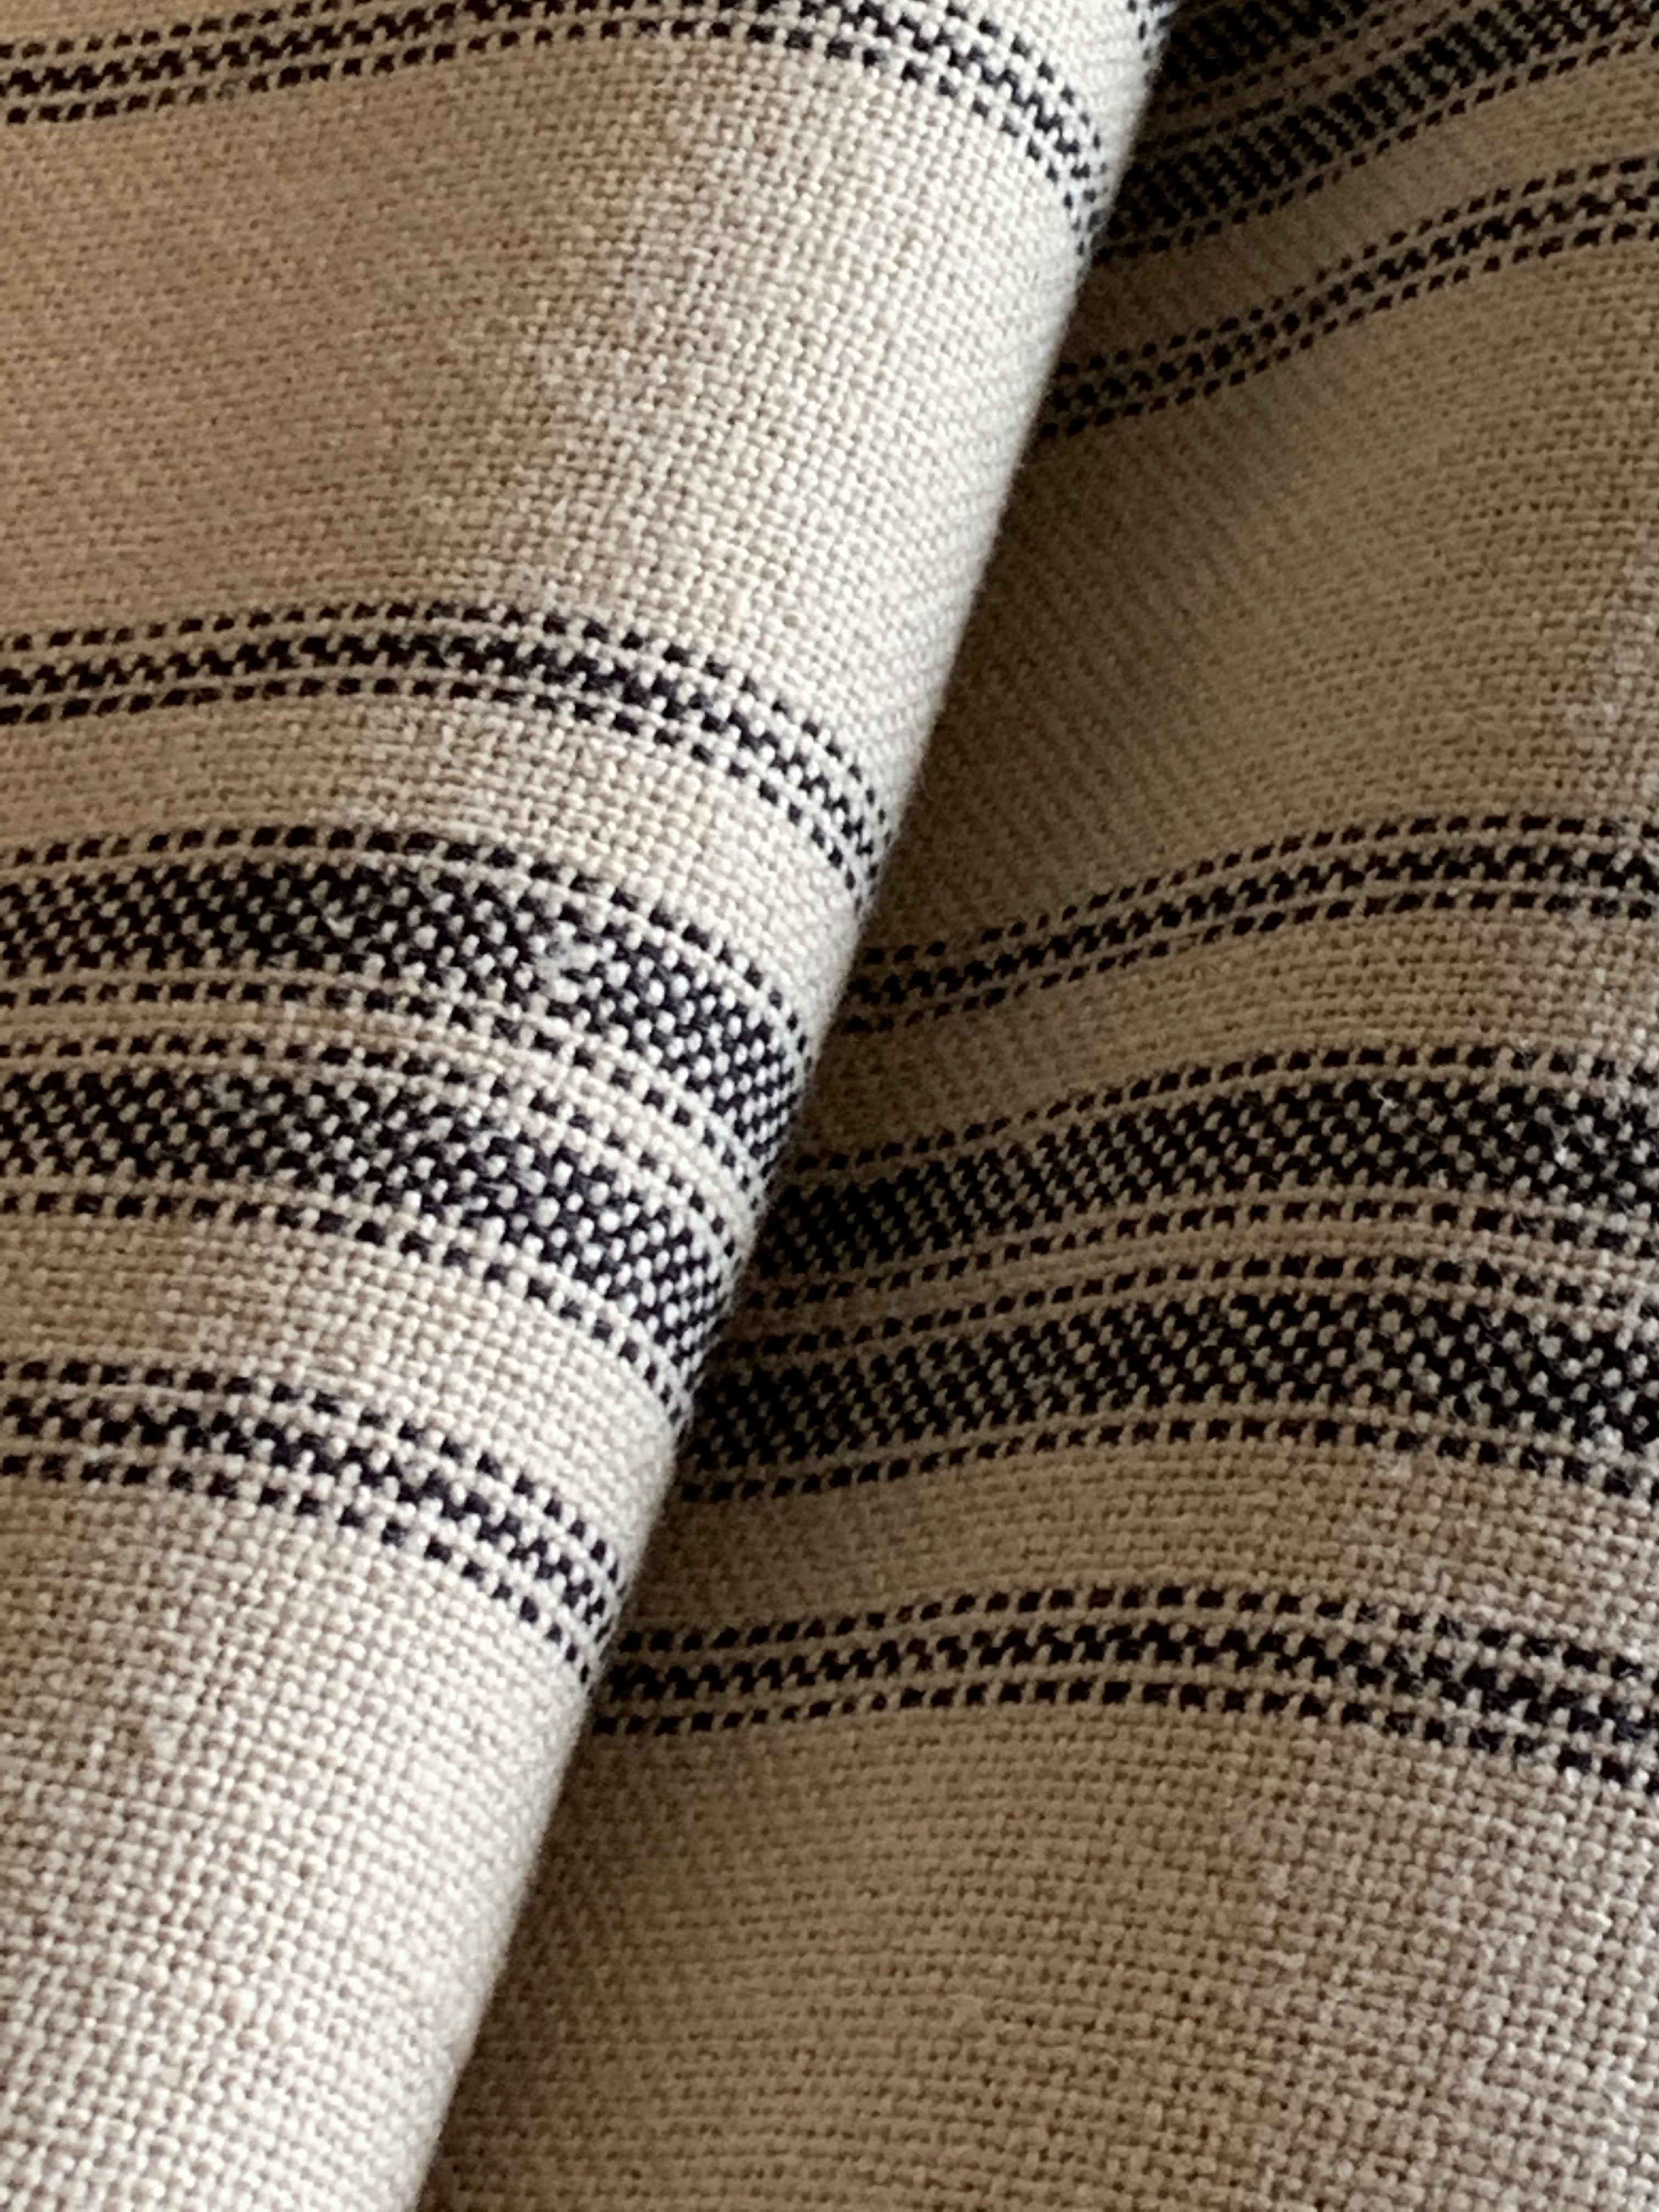 Our Exclusive 63" Black on Beige Multi-Stripe - Grain Sack Fabric